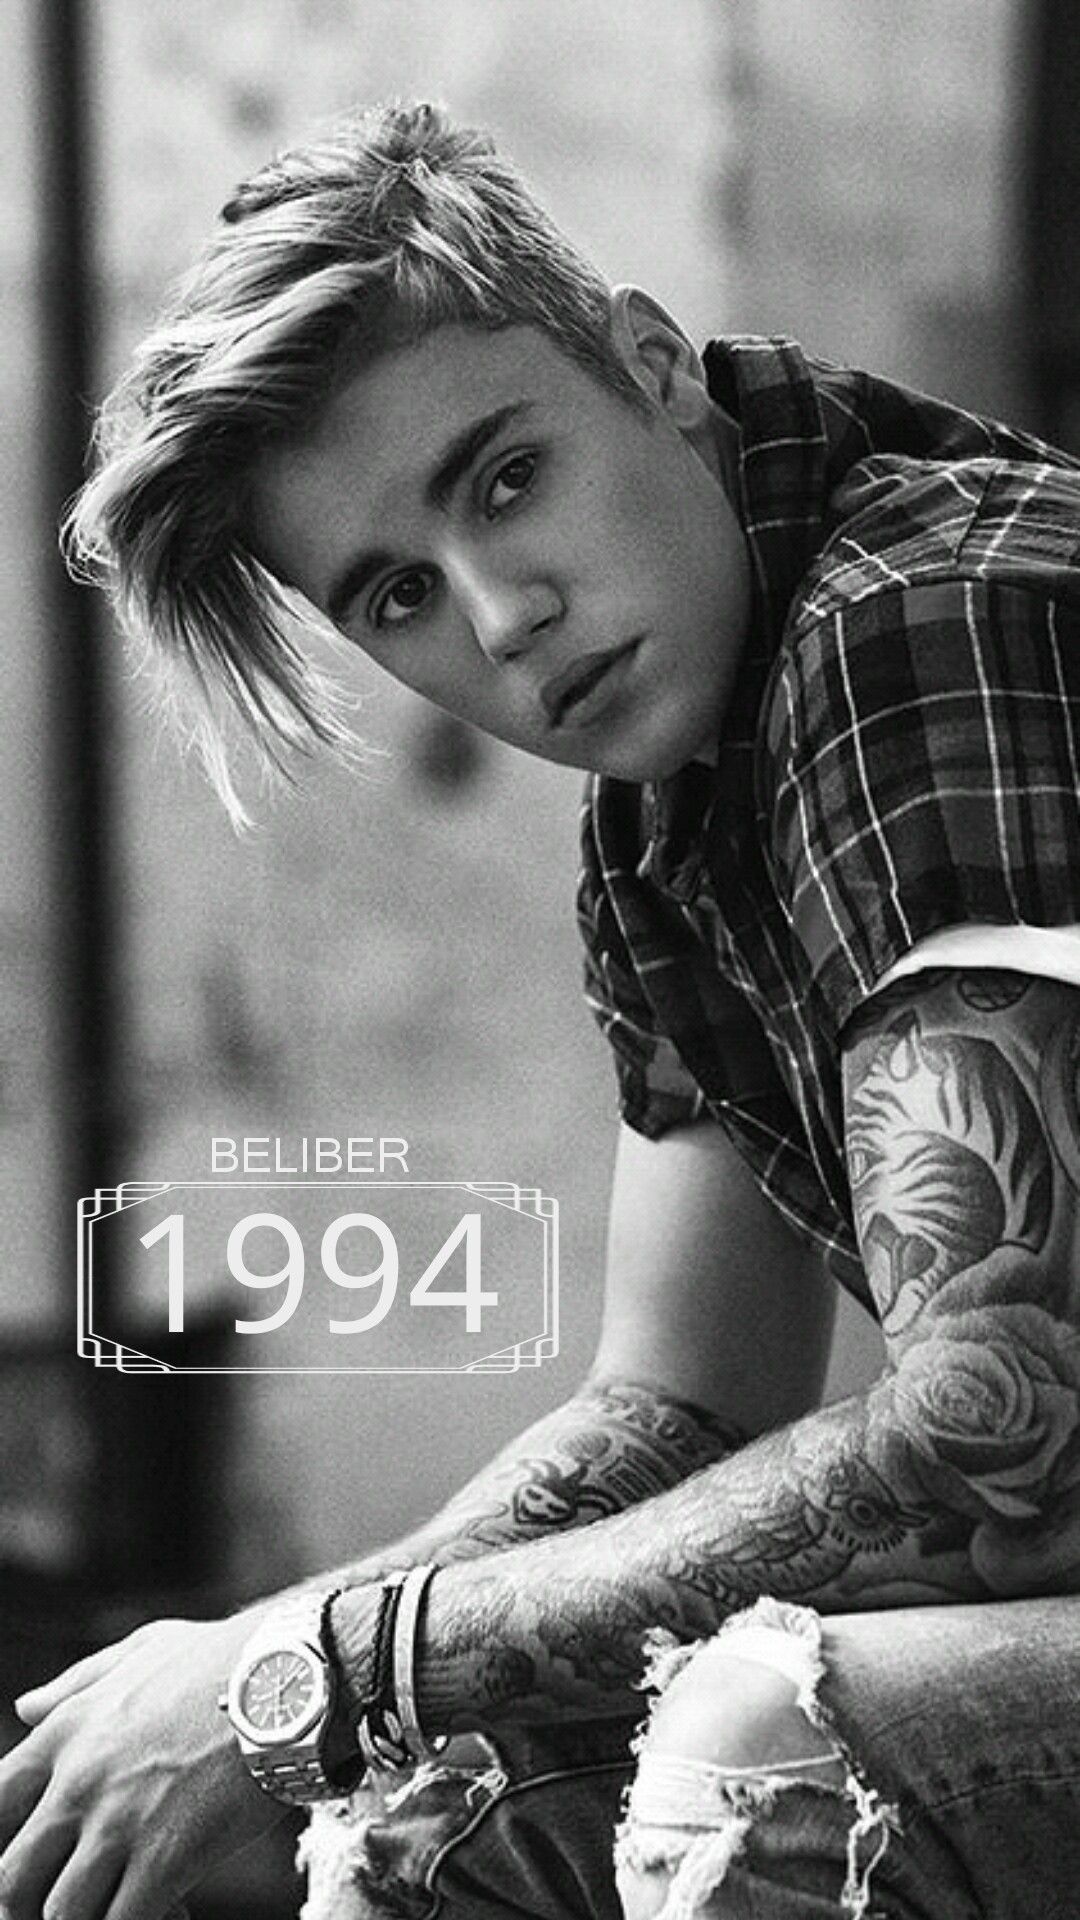 I Love Justin Bieber Wallpaper. Justin bieber